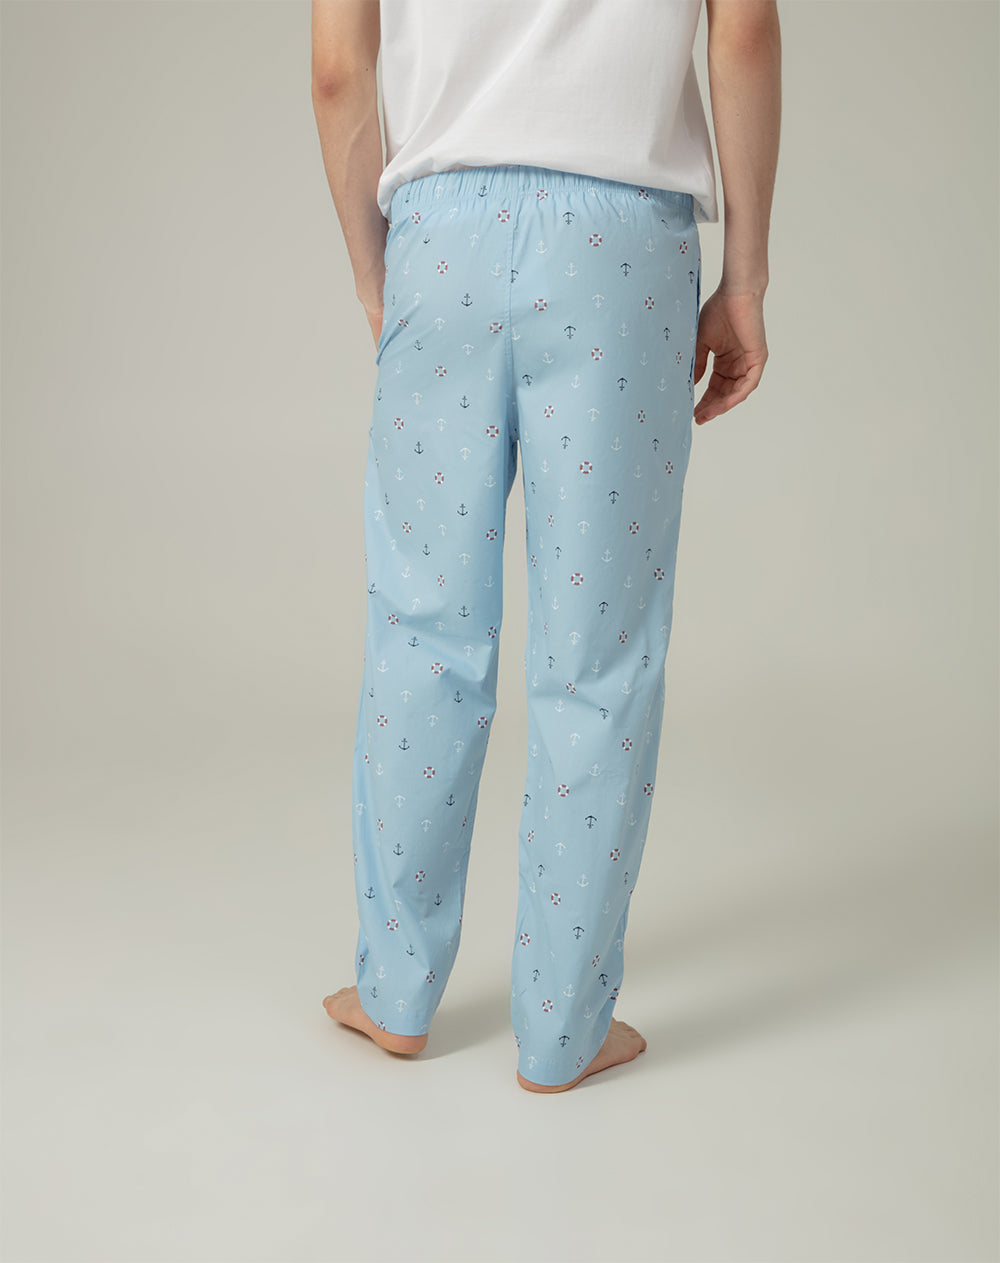 Pantalón regular fit tiro medio azul estampado